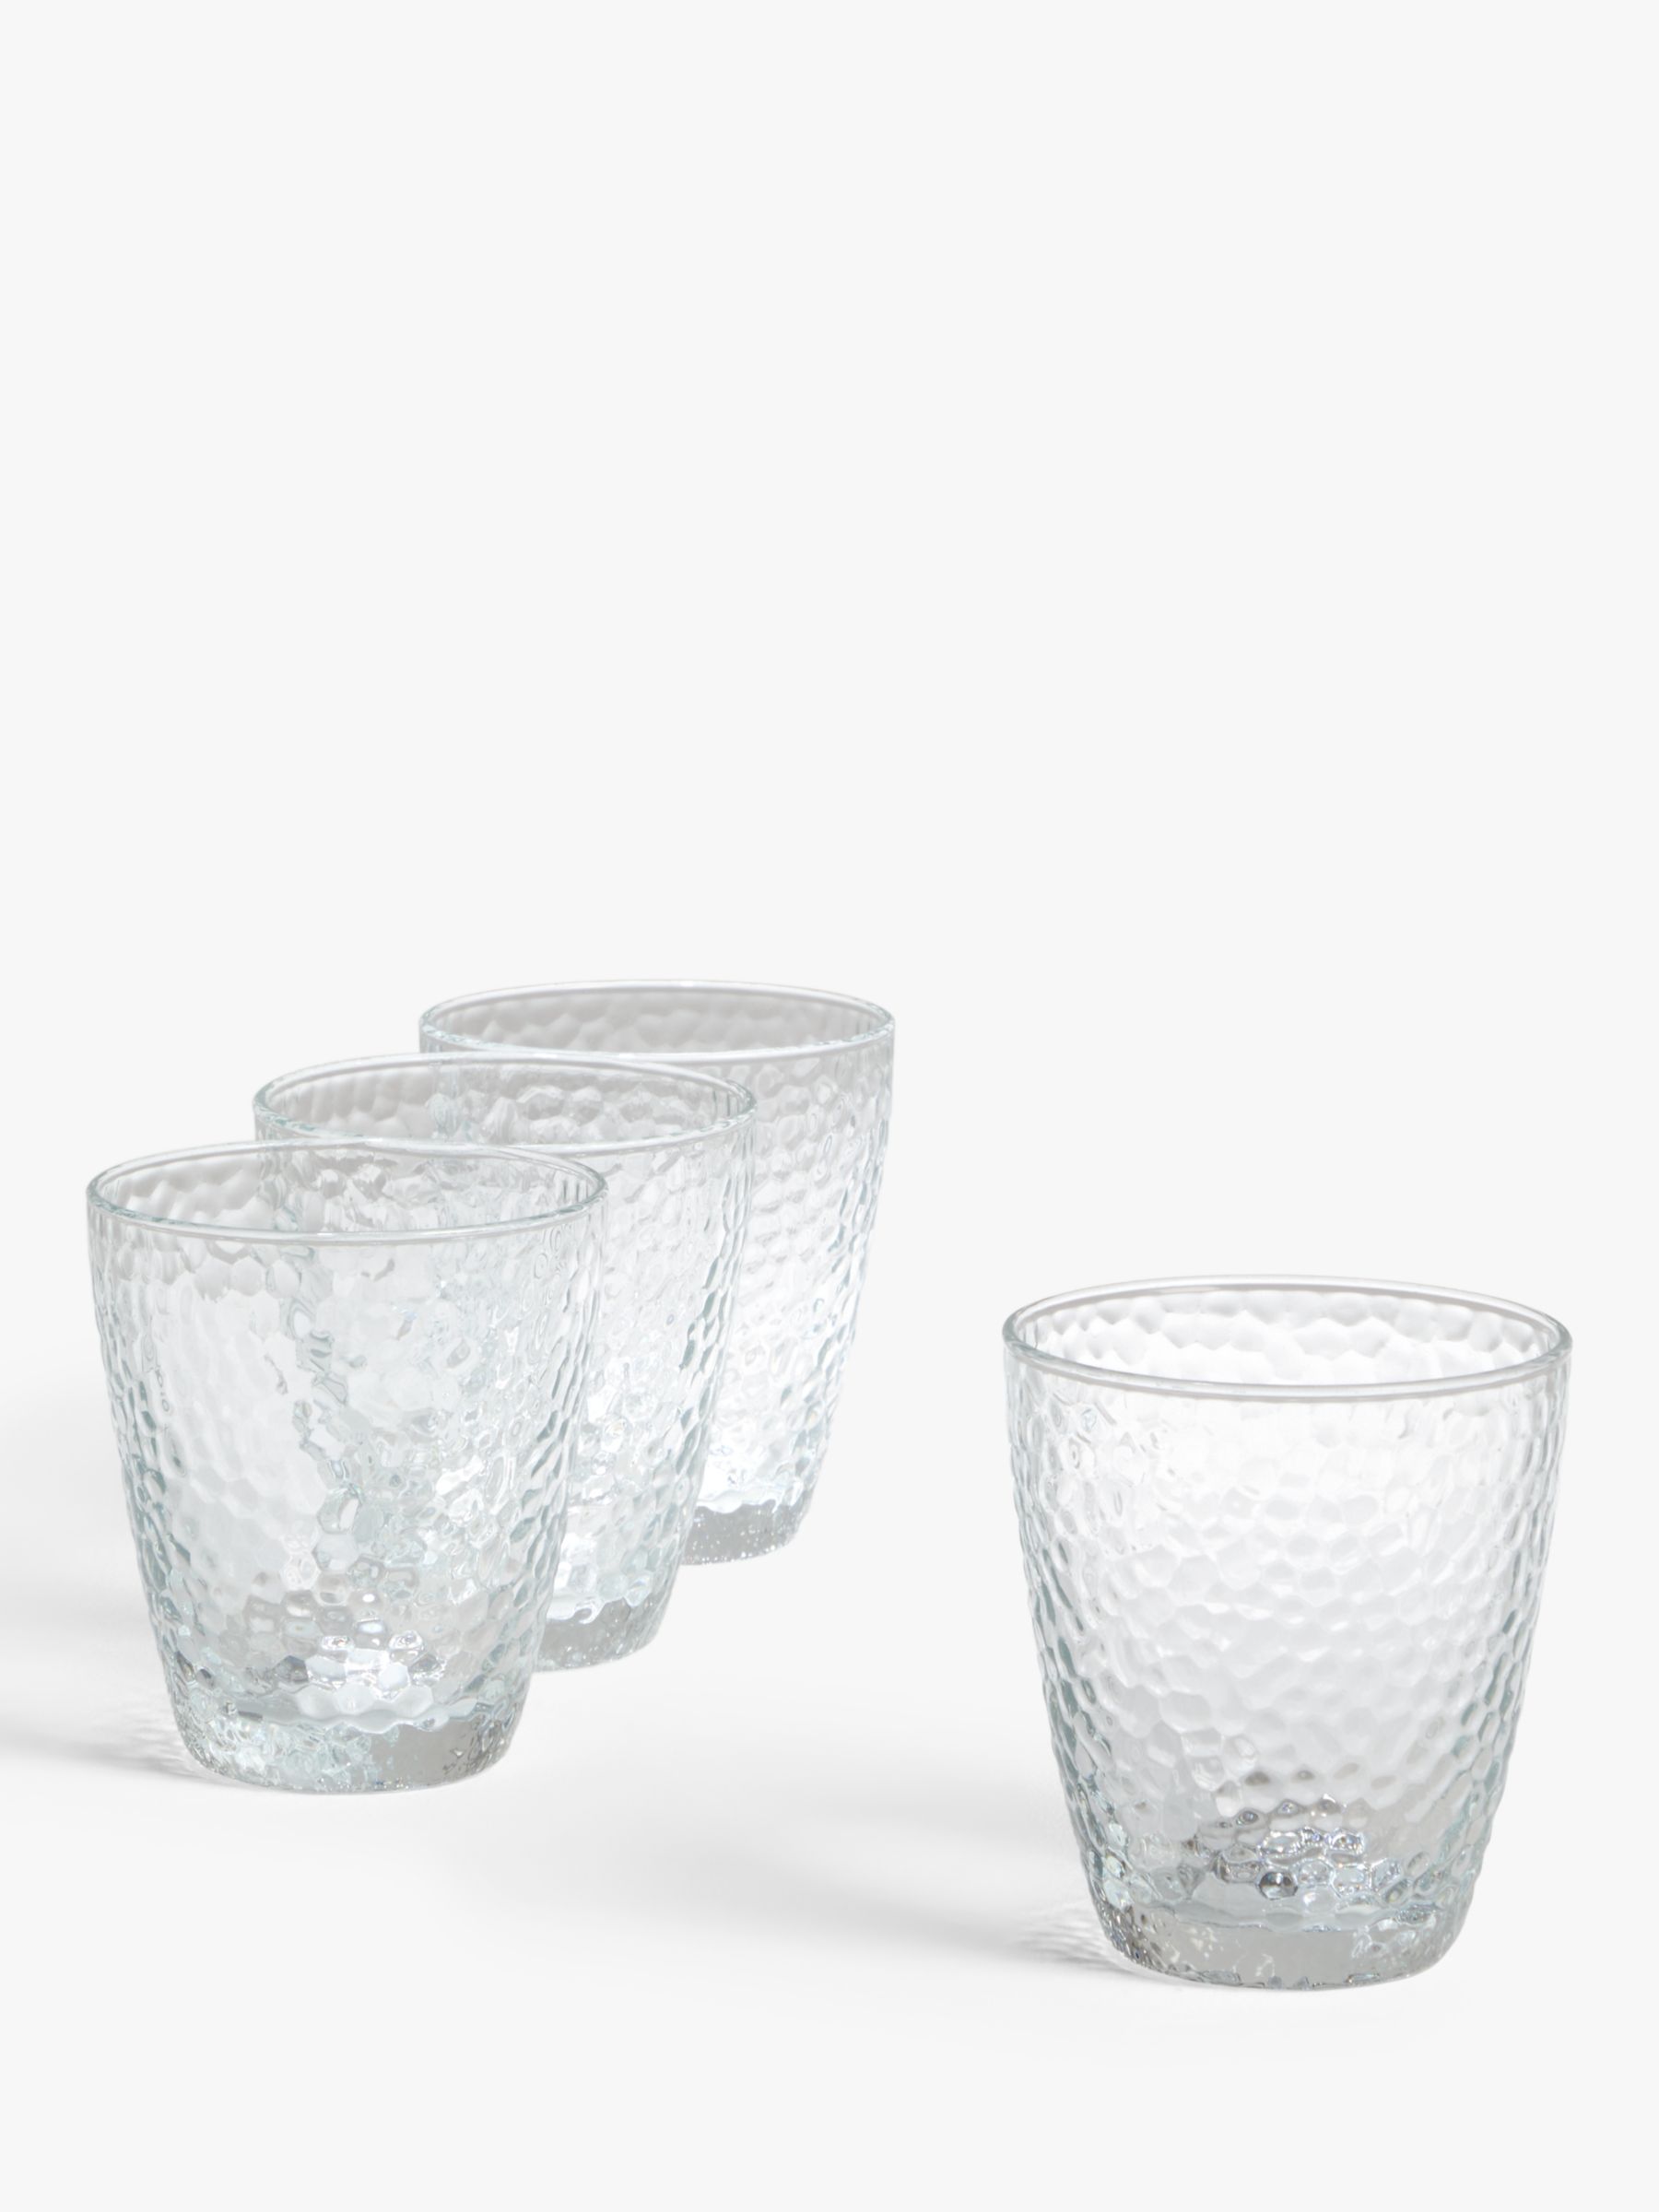 John Lewis & Partners John Lewis & Partners Hammered Glass Tumblers, Set of 4, 300ml